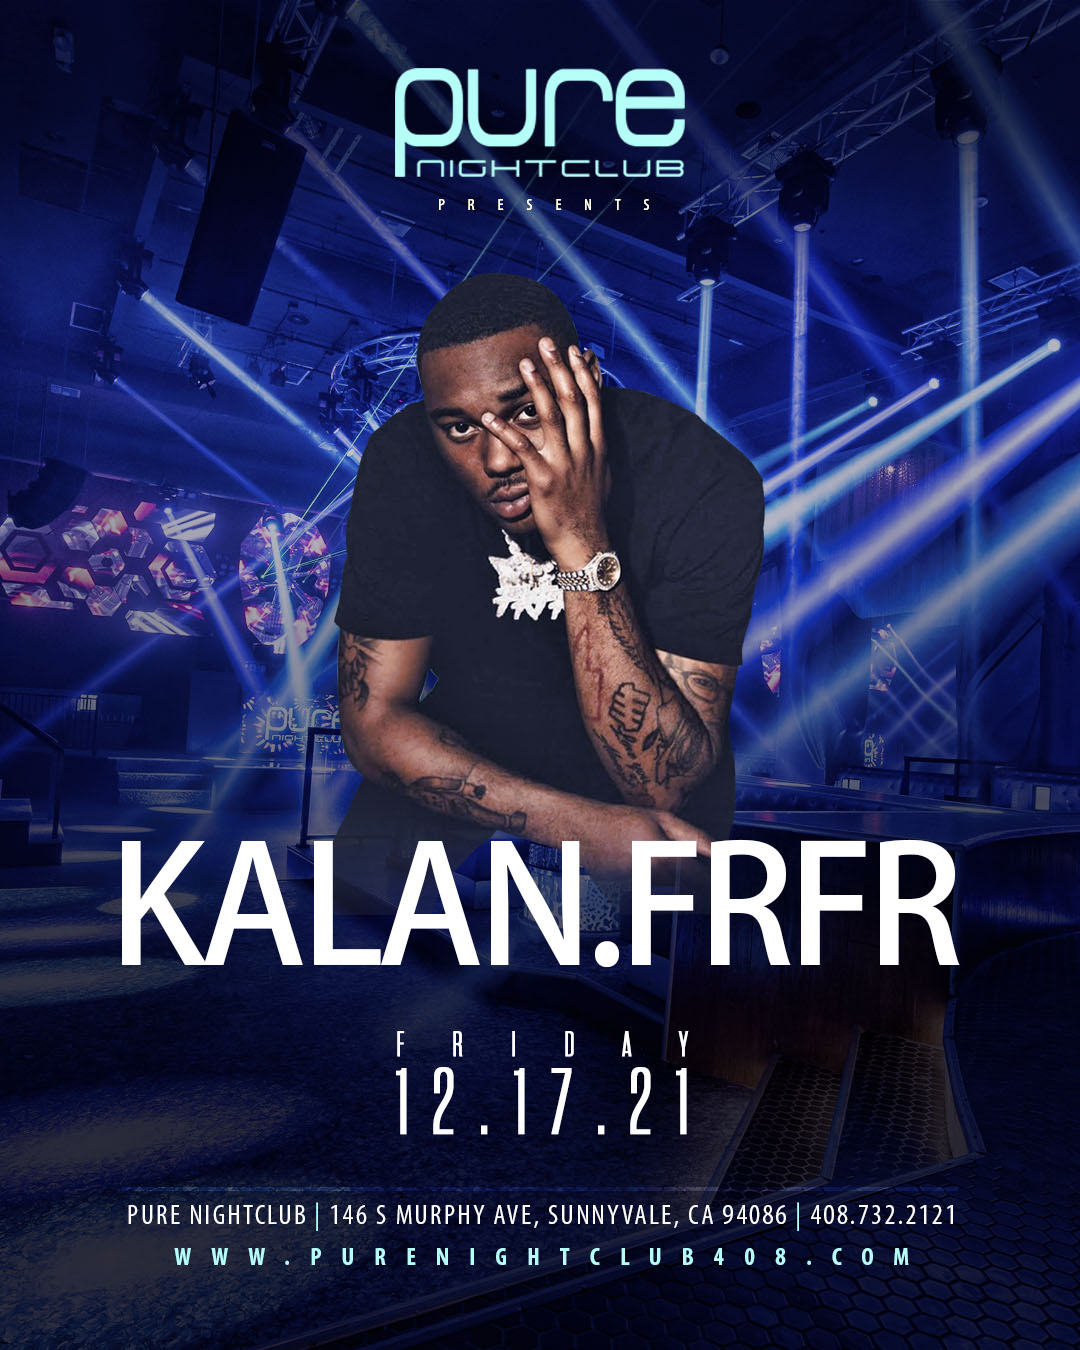 Kalan.FrFr 12.17.21 - PURE NIGHT CLUB